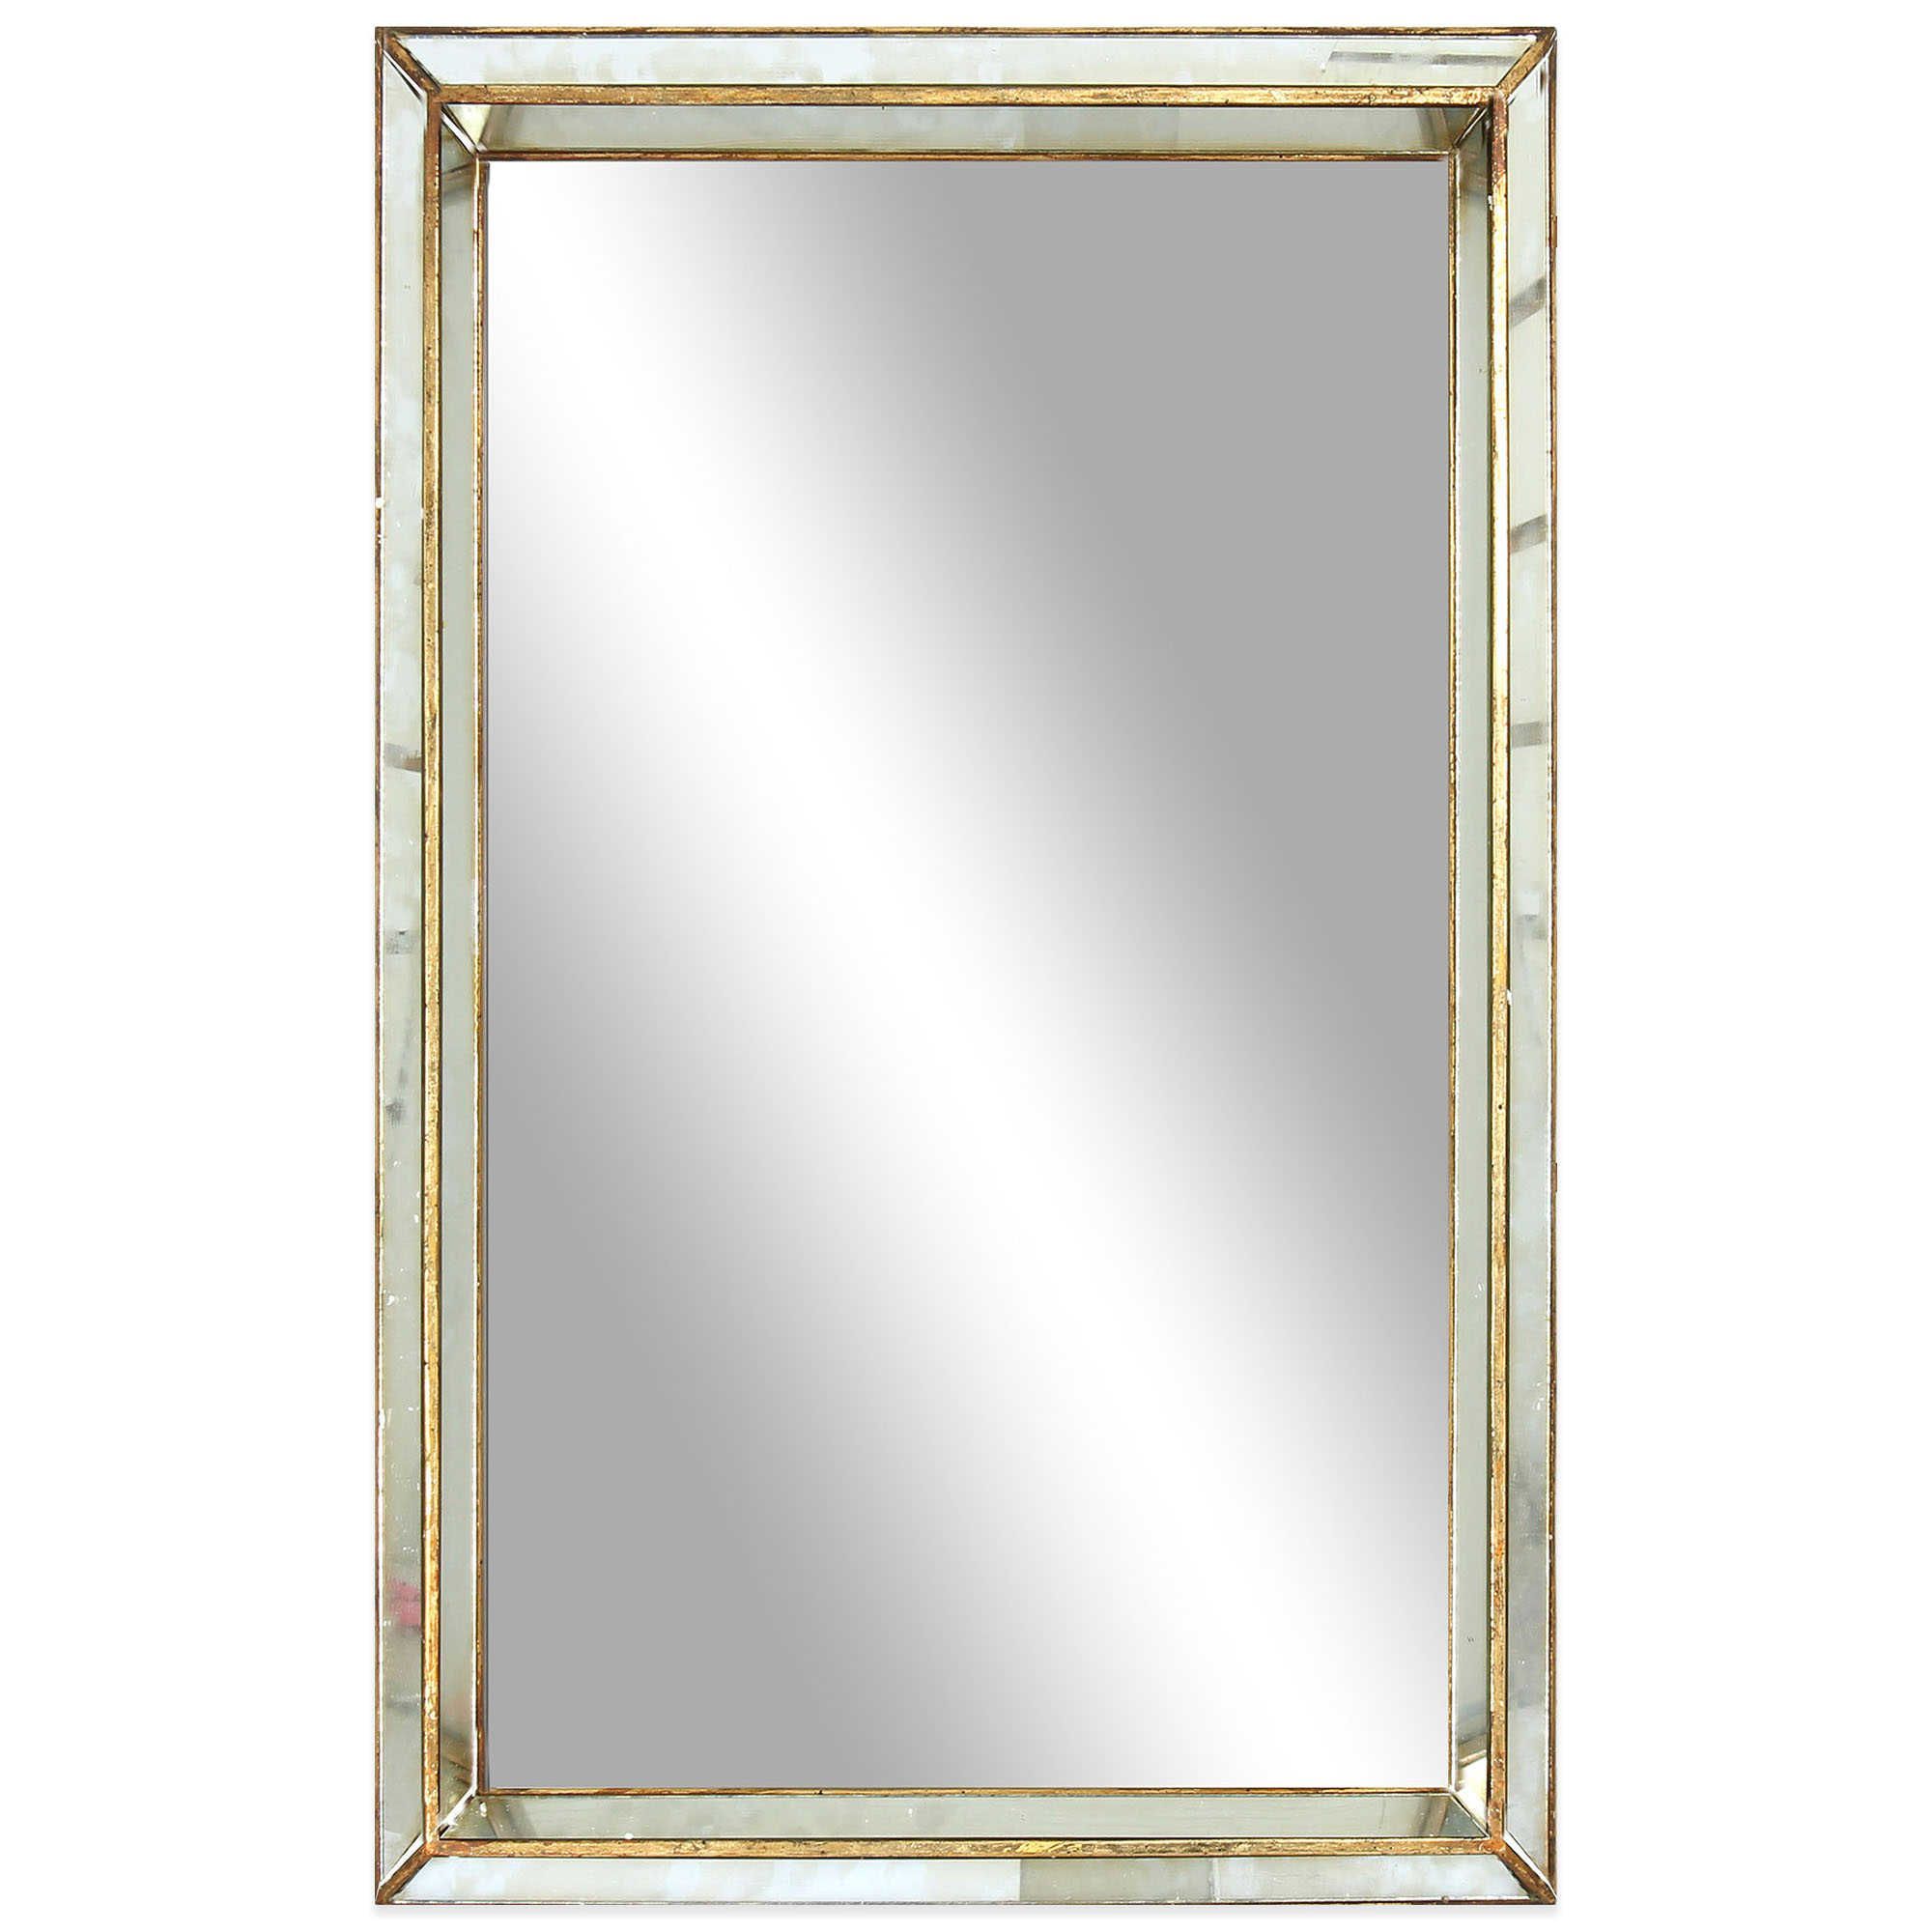 Invalid Url | Antique Gold Mirror, Large Mirror, Rectangular Mirror Regarding Ultra Brushed Gold Rectangular Framed Wall Mirrors (View 7 of 15)